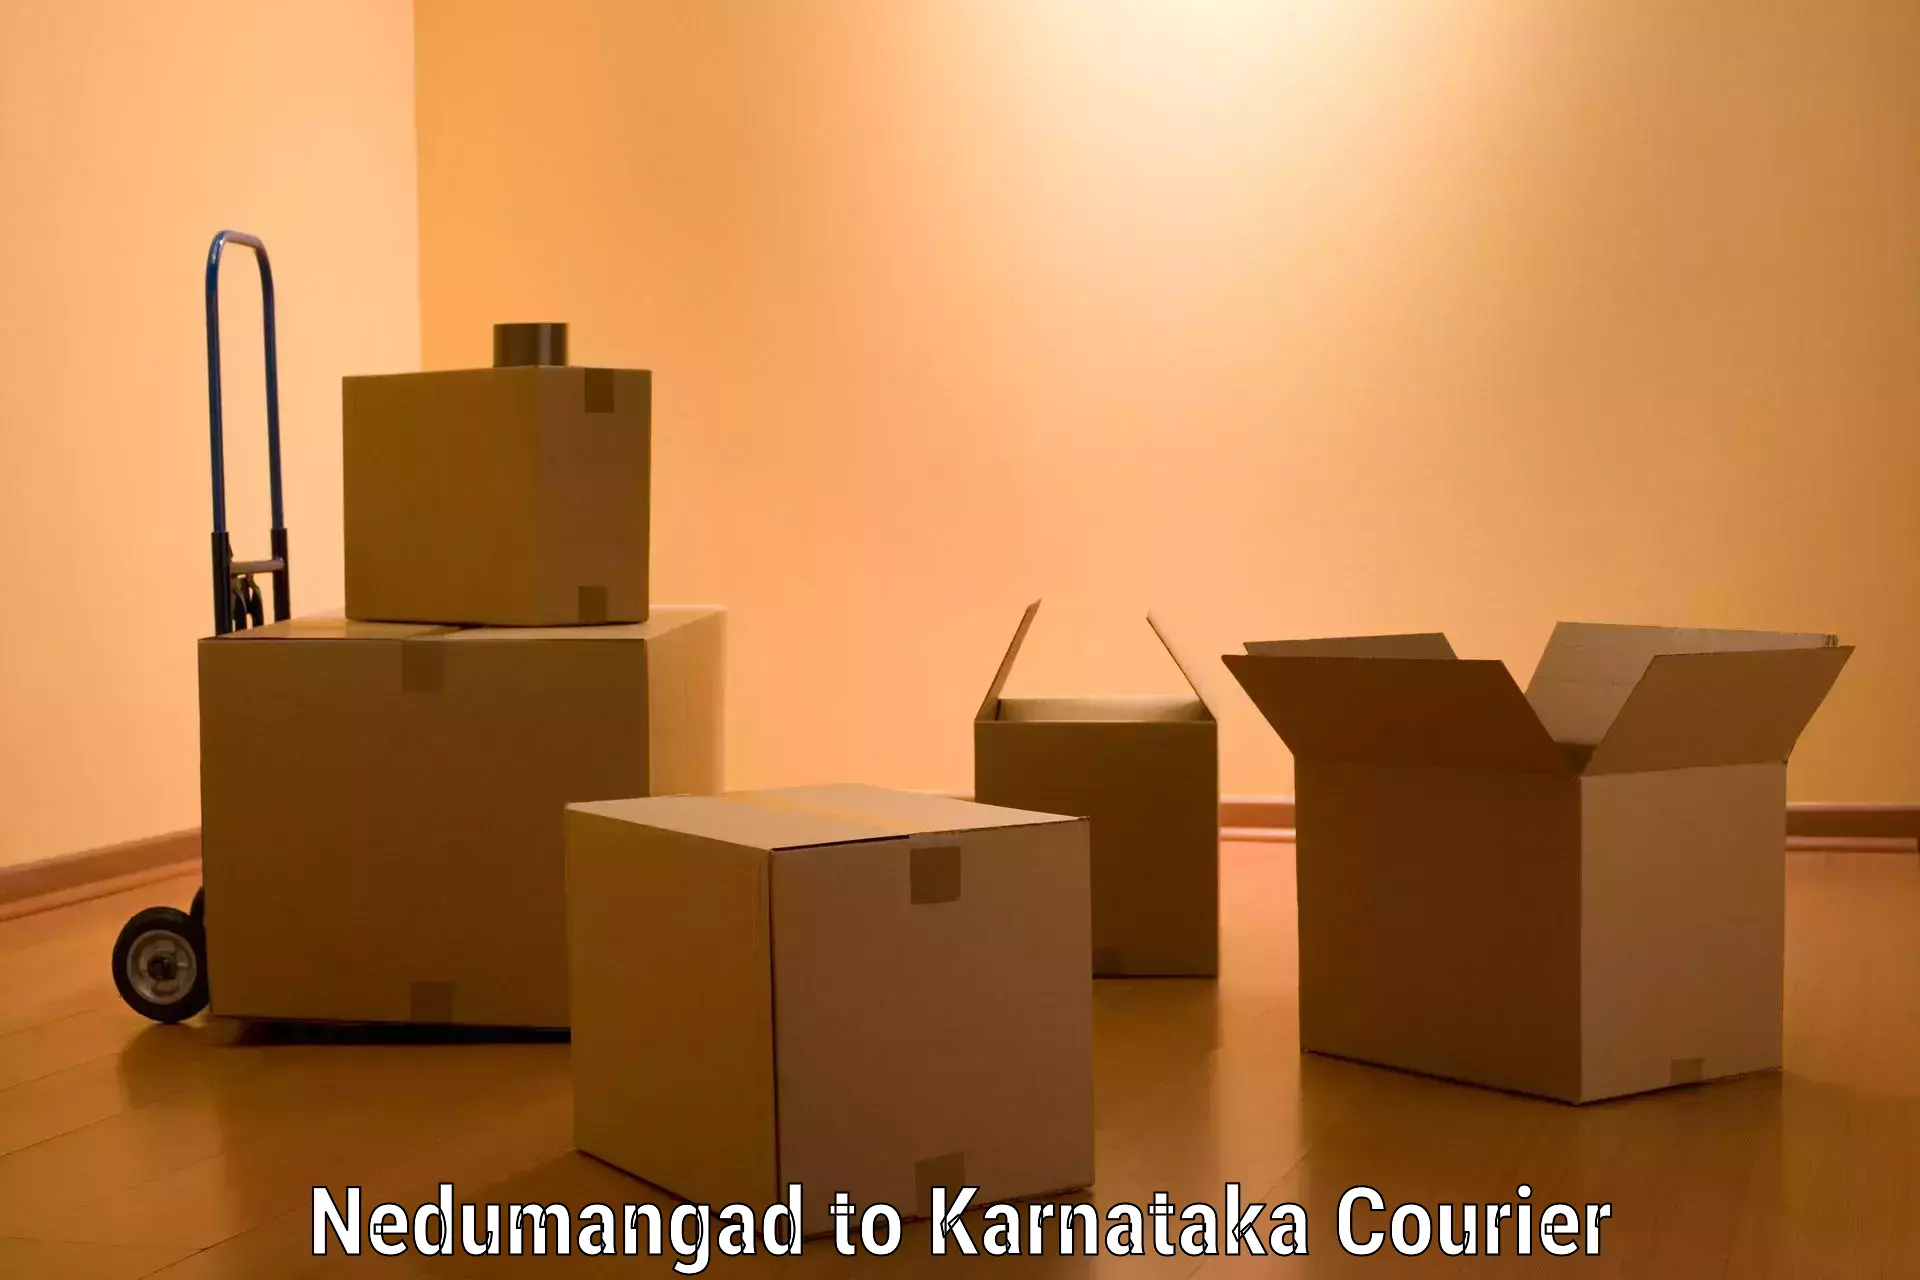 Moving and packing experts Nedumangad to Karnataka